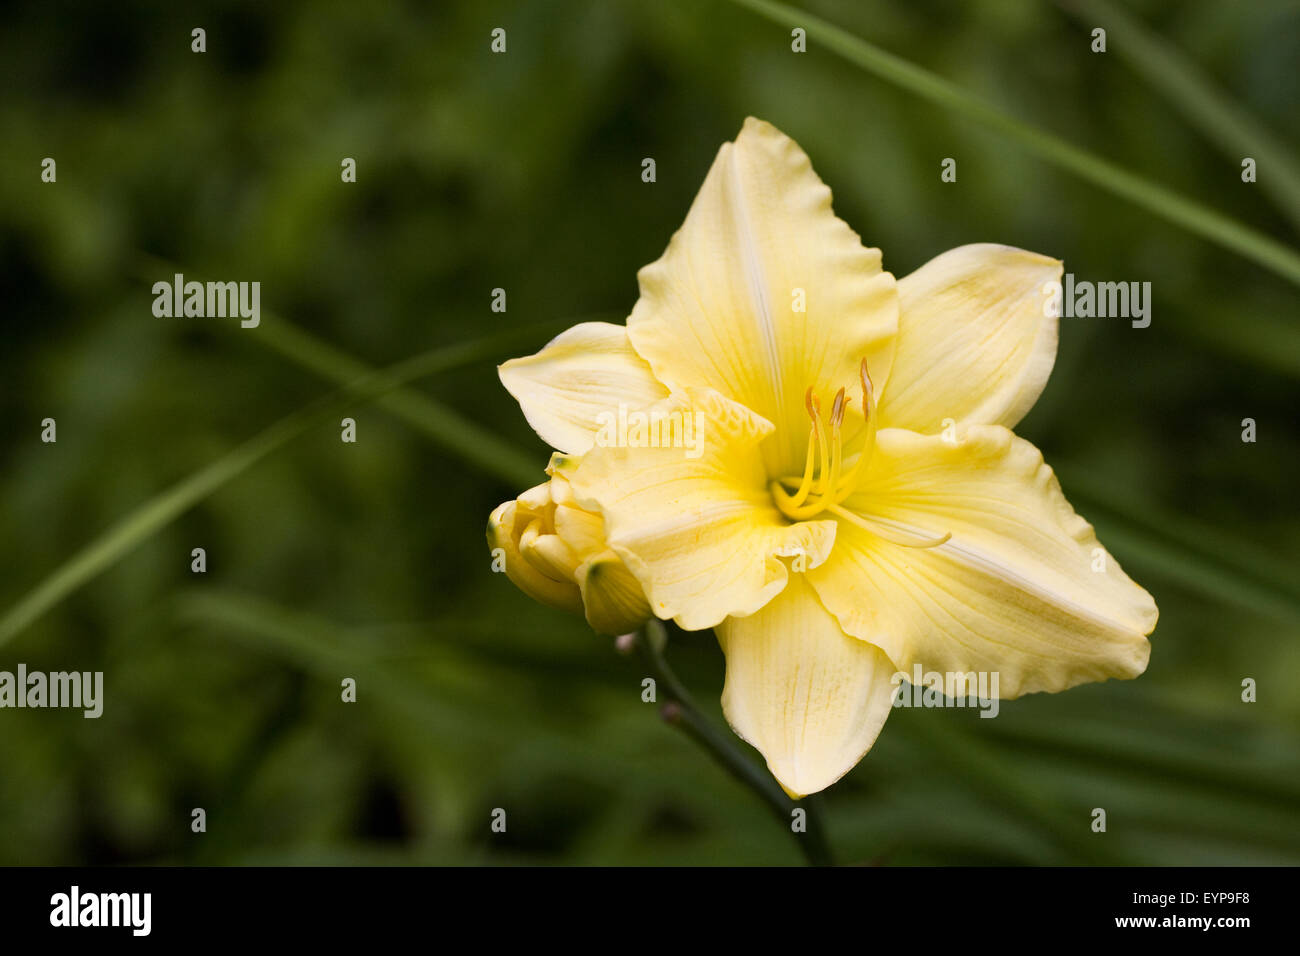 Hemerocallis in an English garden. Yellow day lily flower. Stock Photo